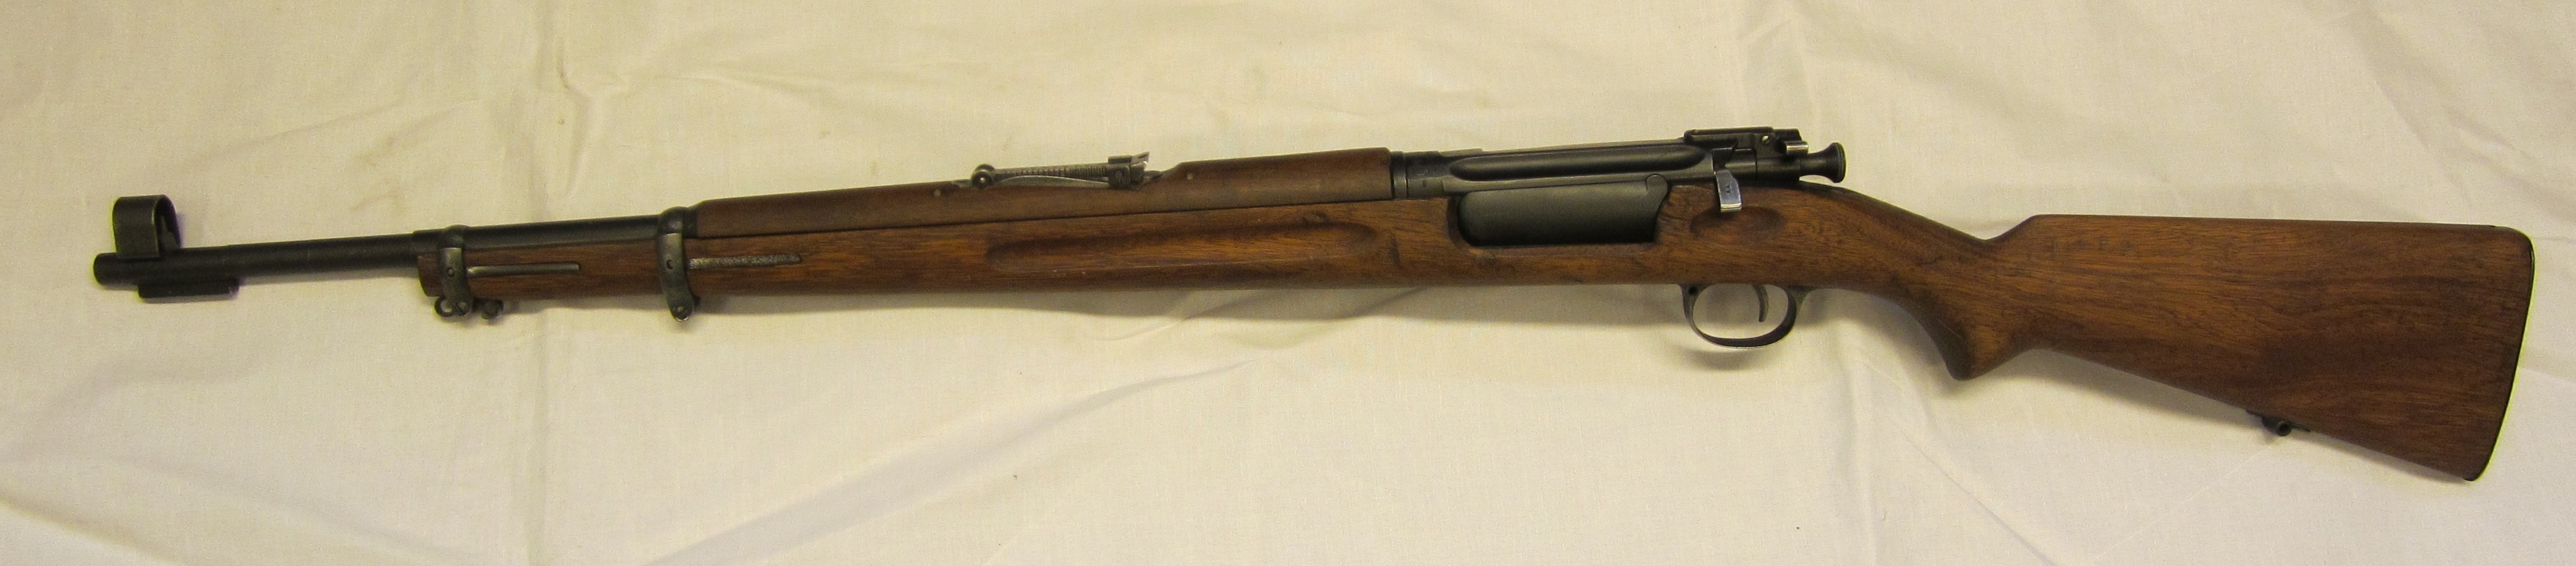 ./guns/rifle/bilder/Rifle-Kongsberg-Krag-M1894-Stomperud-NC601-19.JPG